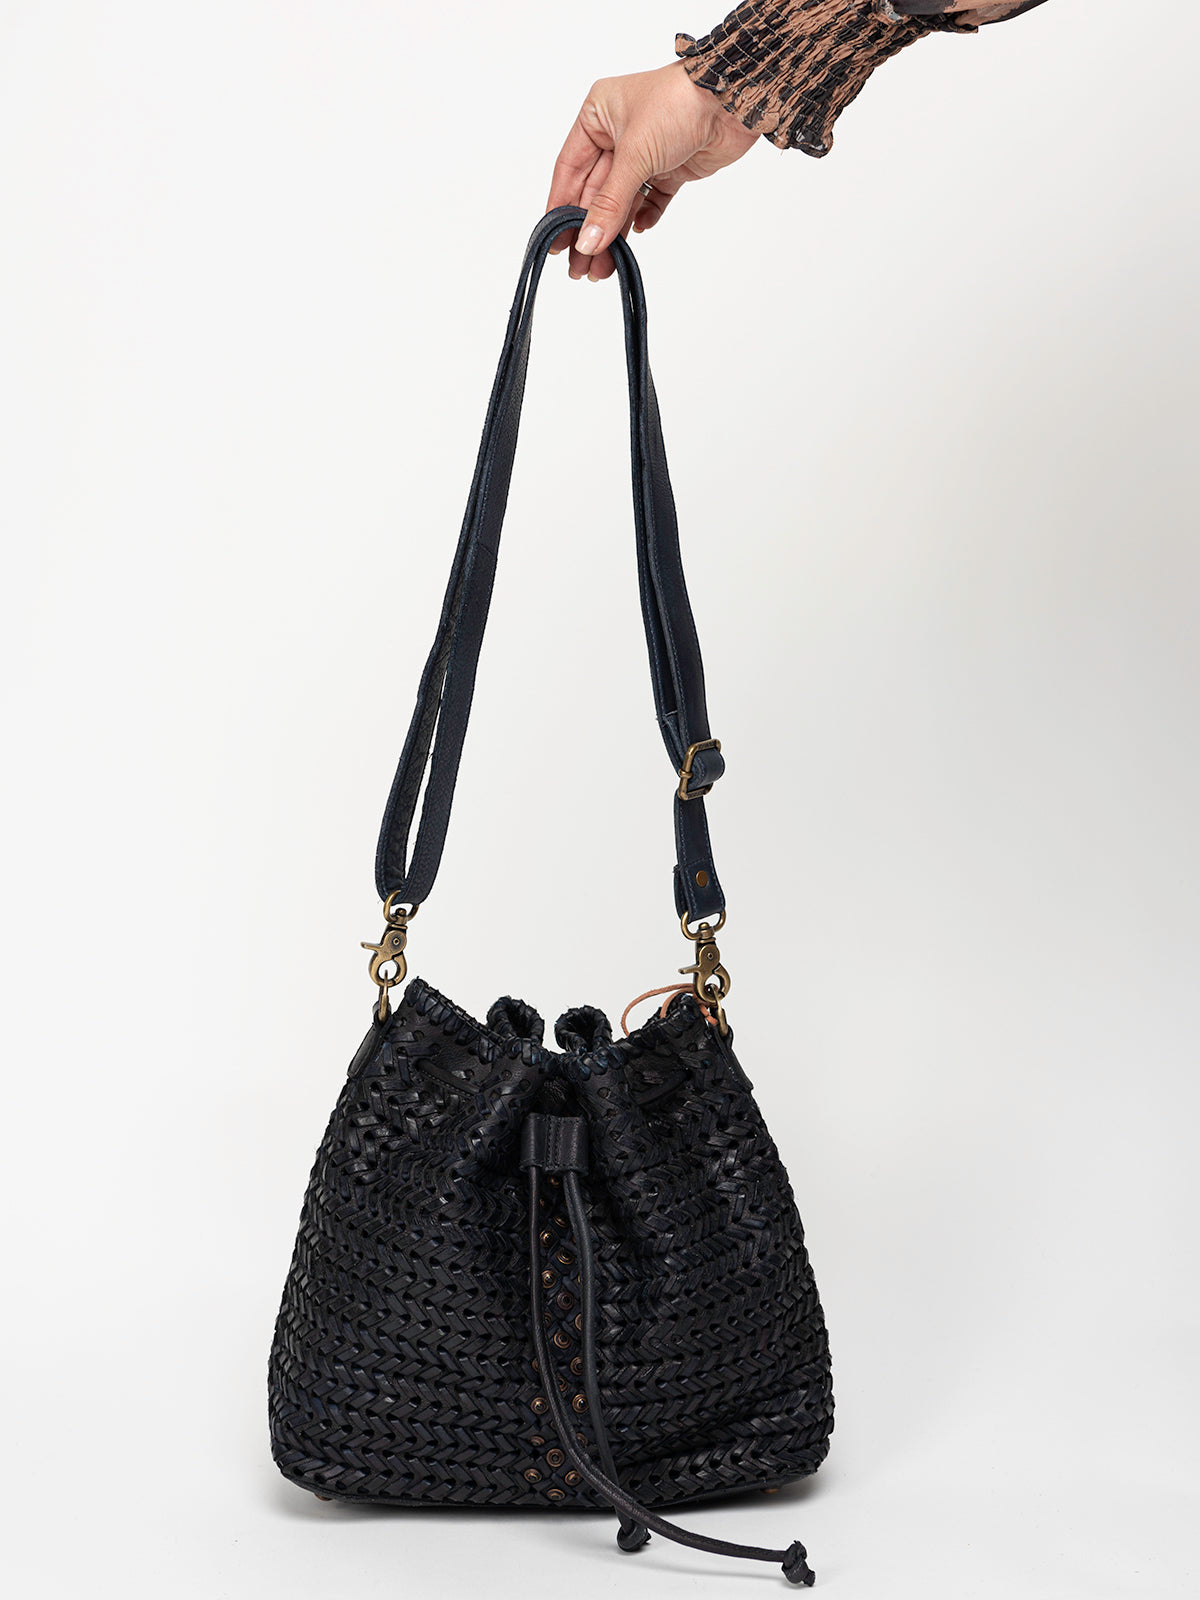 JOELLE: Black leather round shape crossbody bag by Art N Vintage